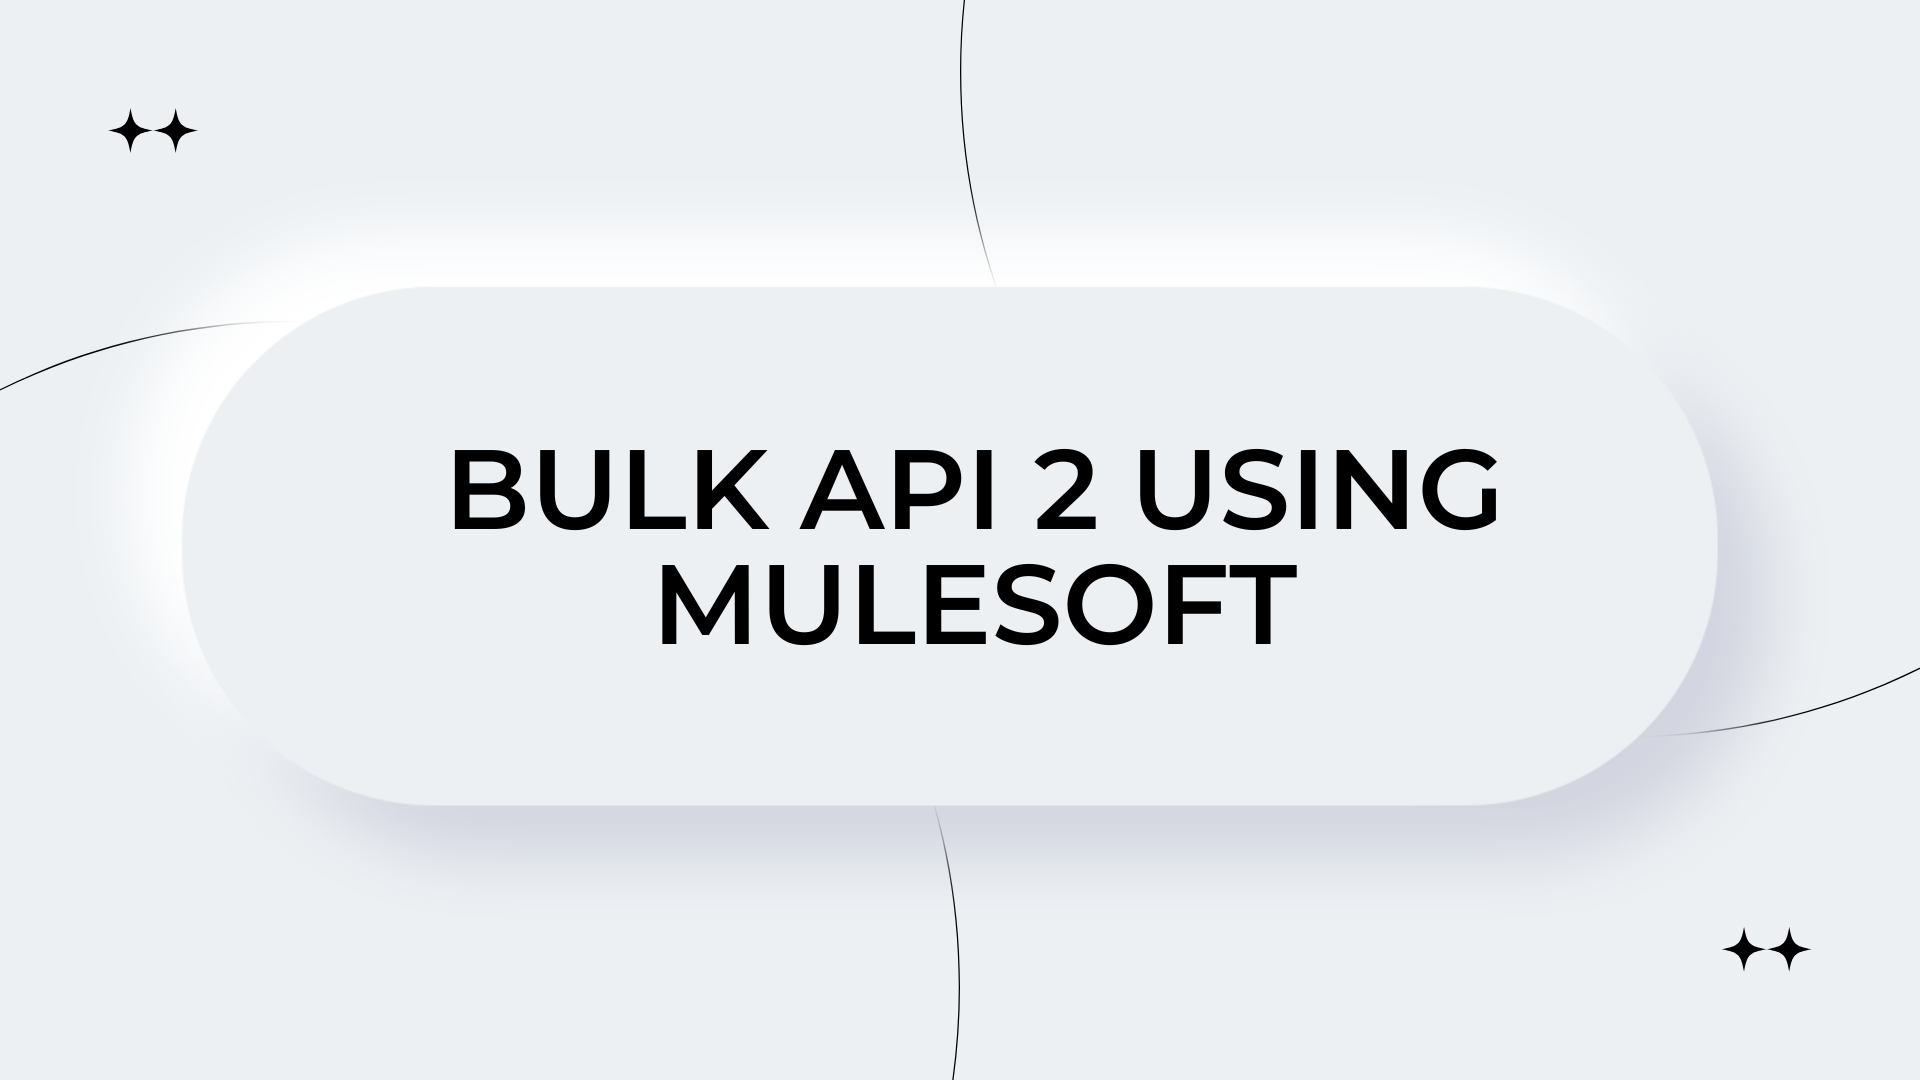 Salesforce Bulk API 2 using Mulesoft